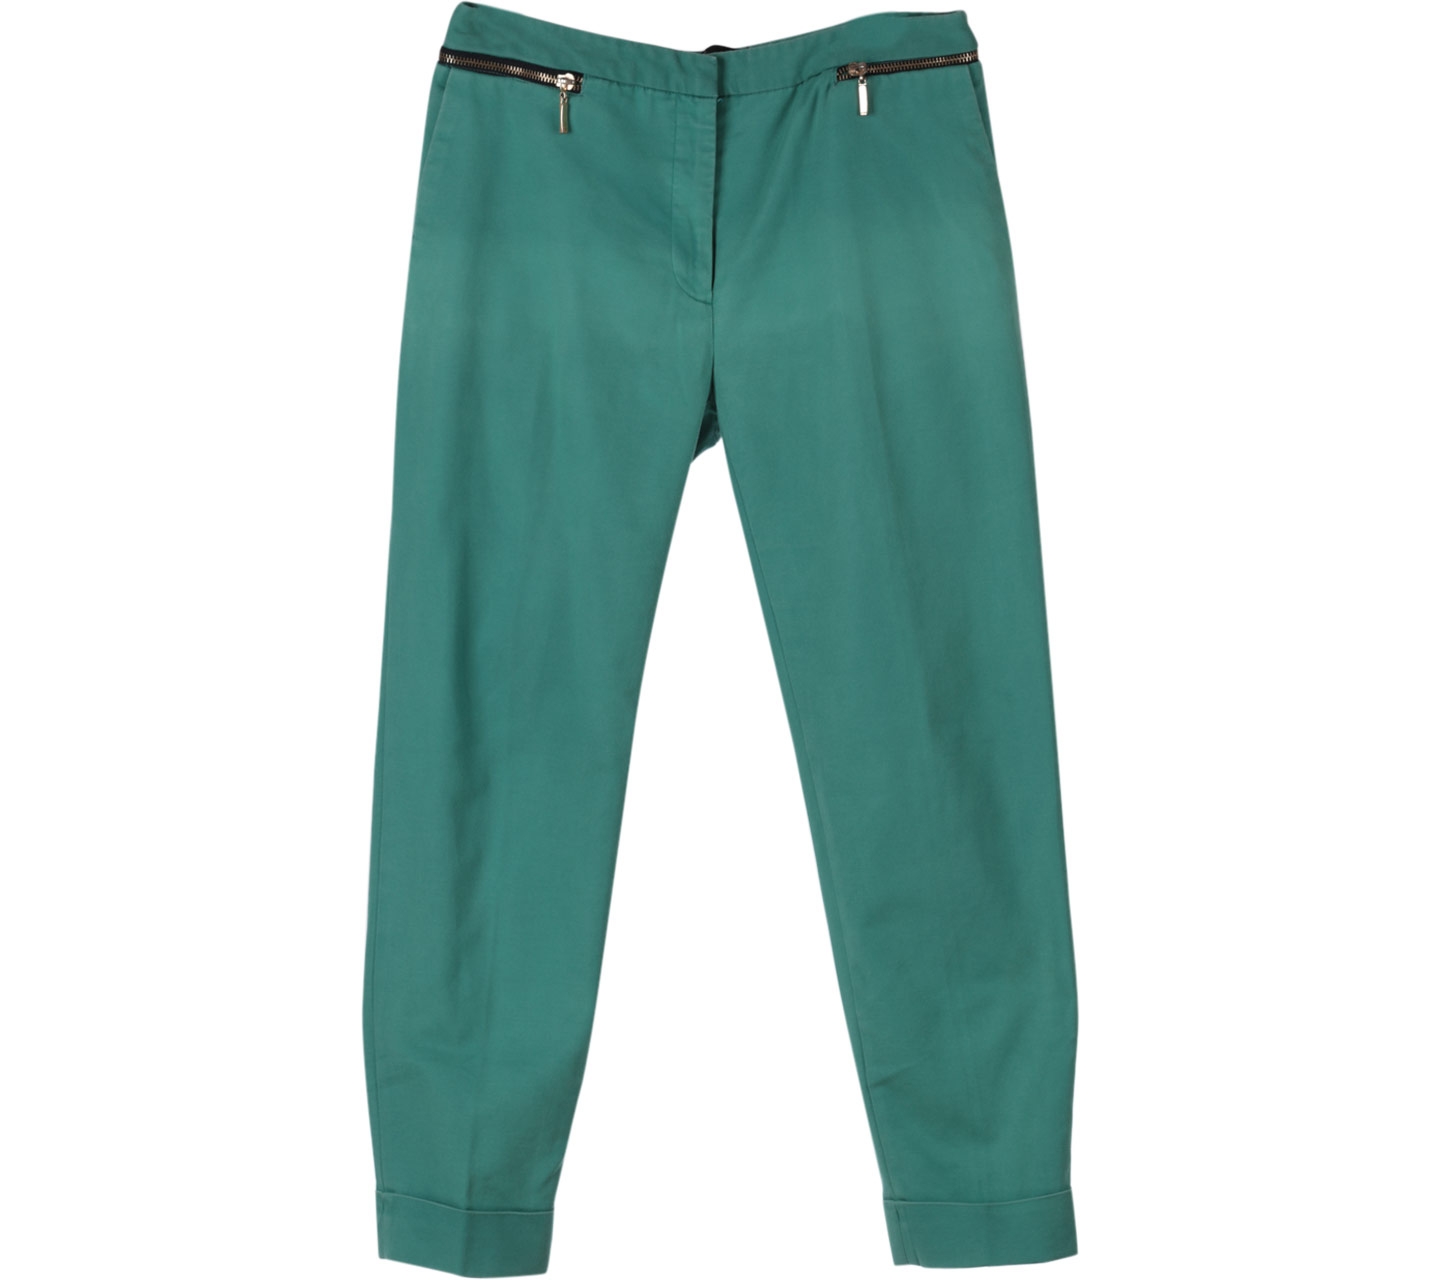 Zara Green Zipper Pants Pants